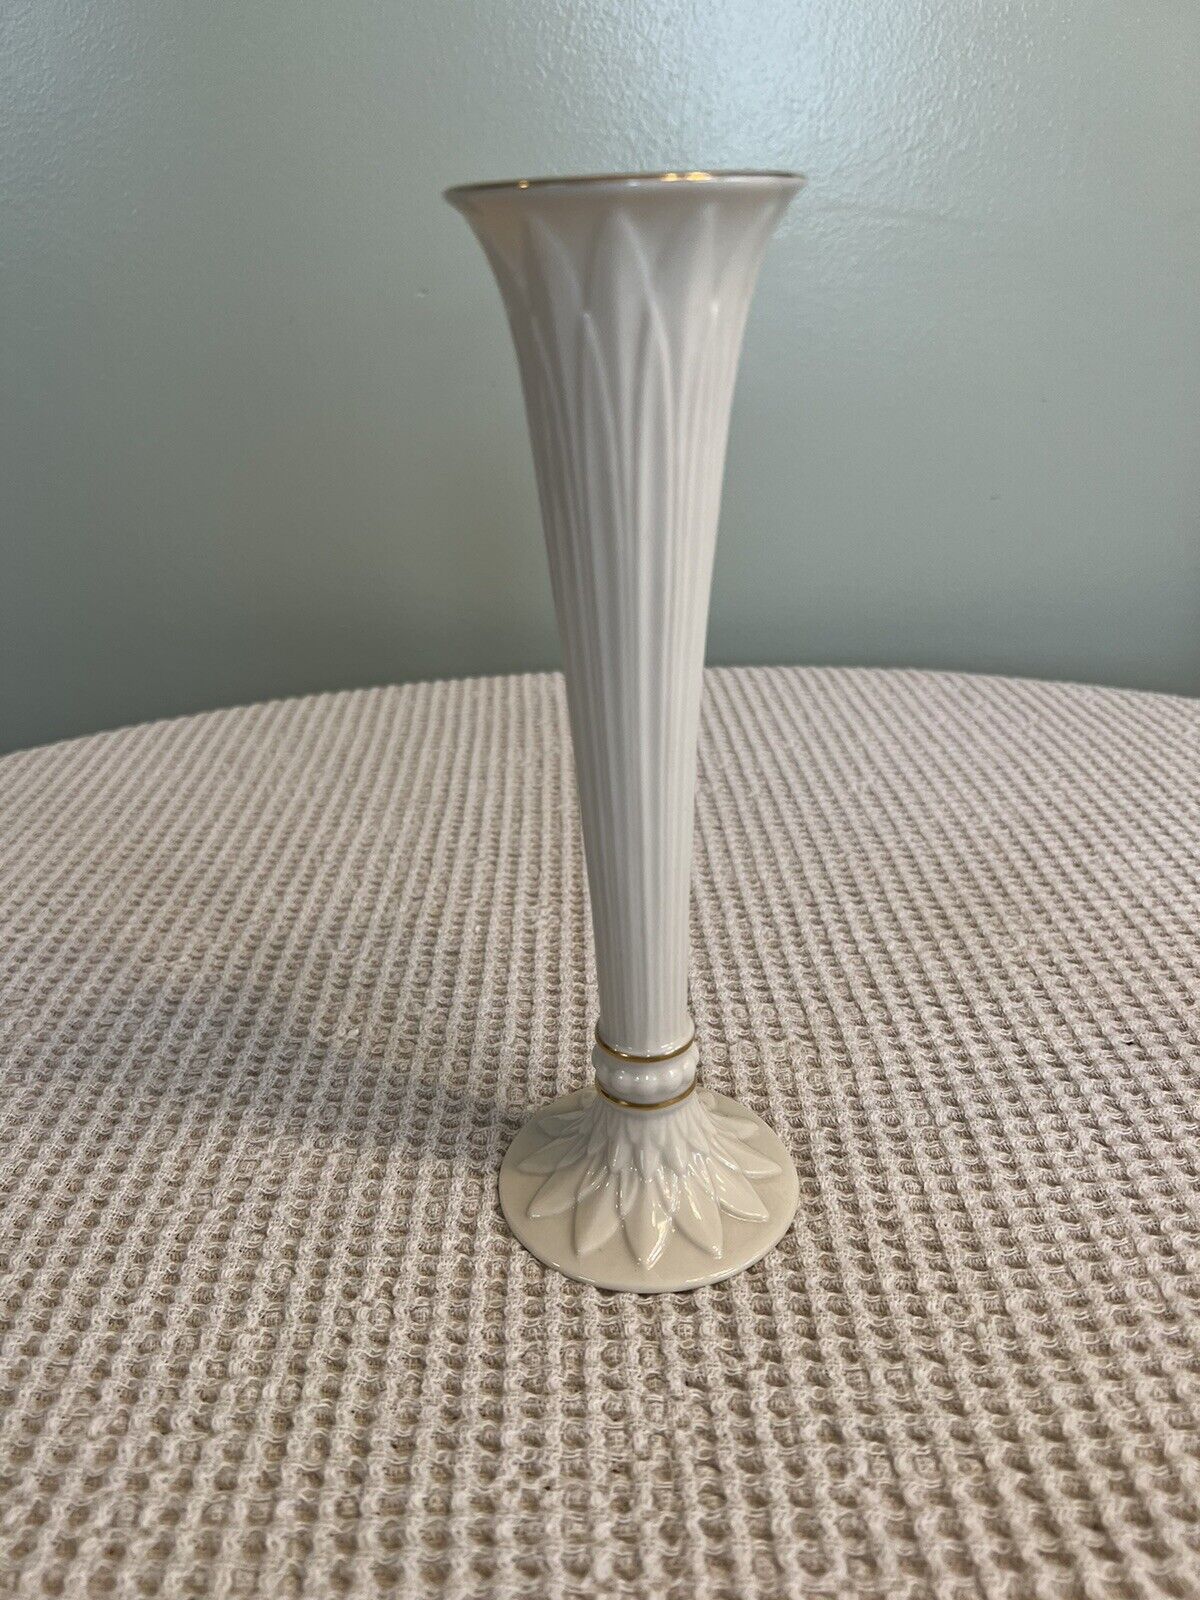 Vtg Lenox 9 inch flower vase with gold trim Tivoli collection 